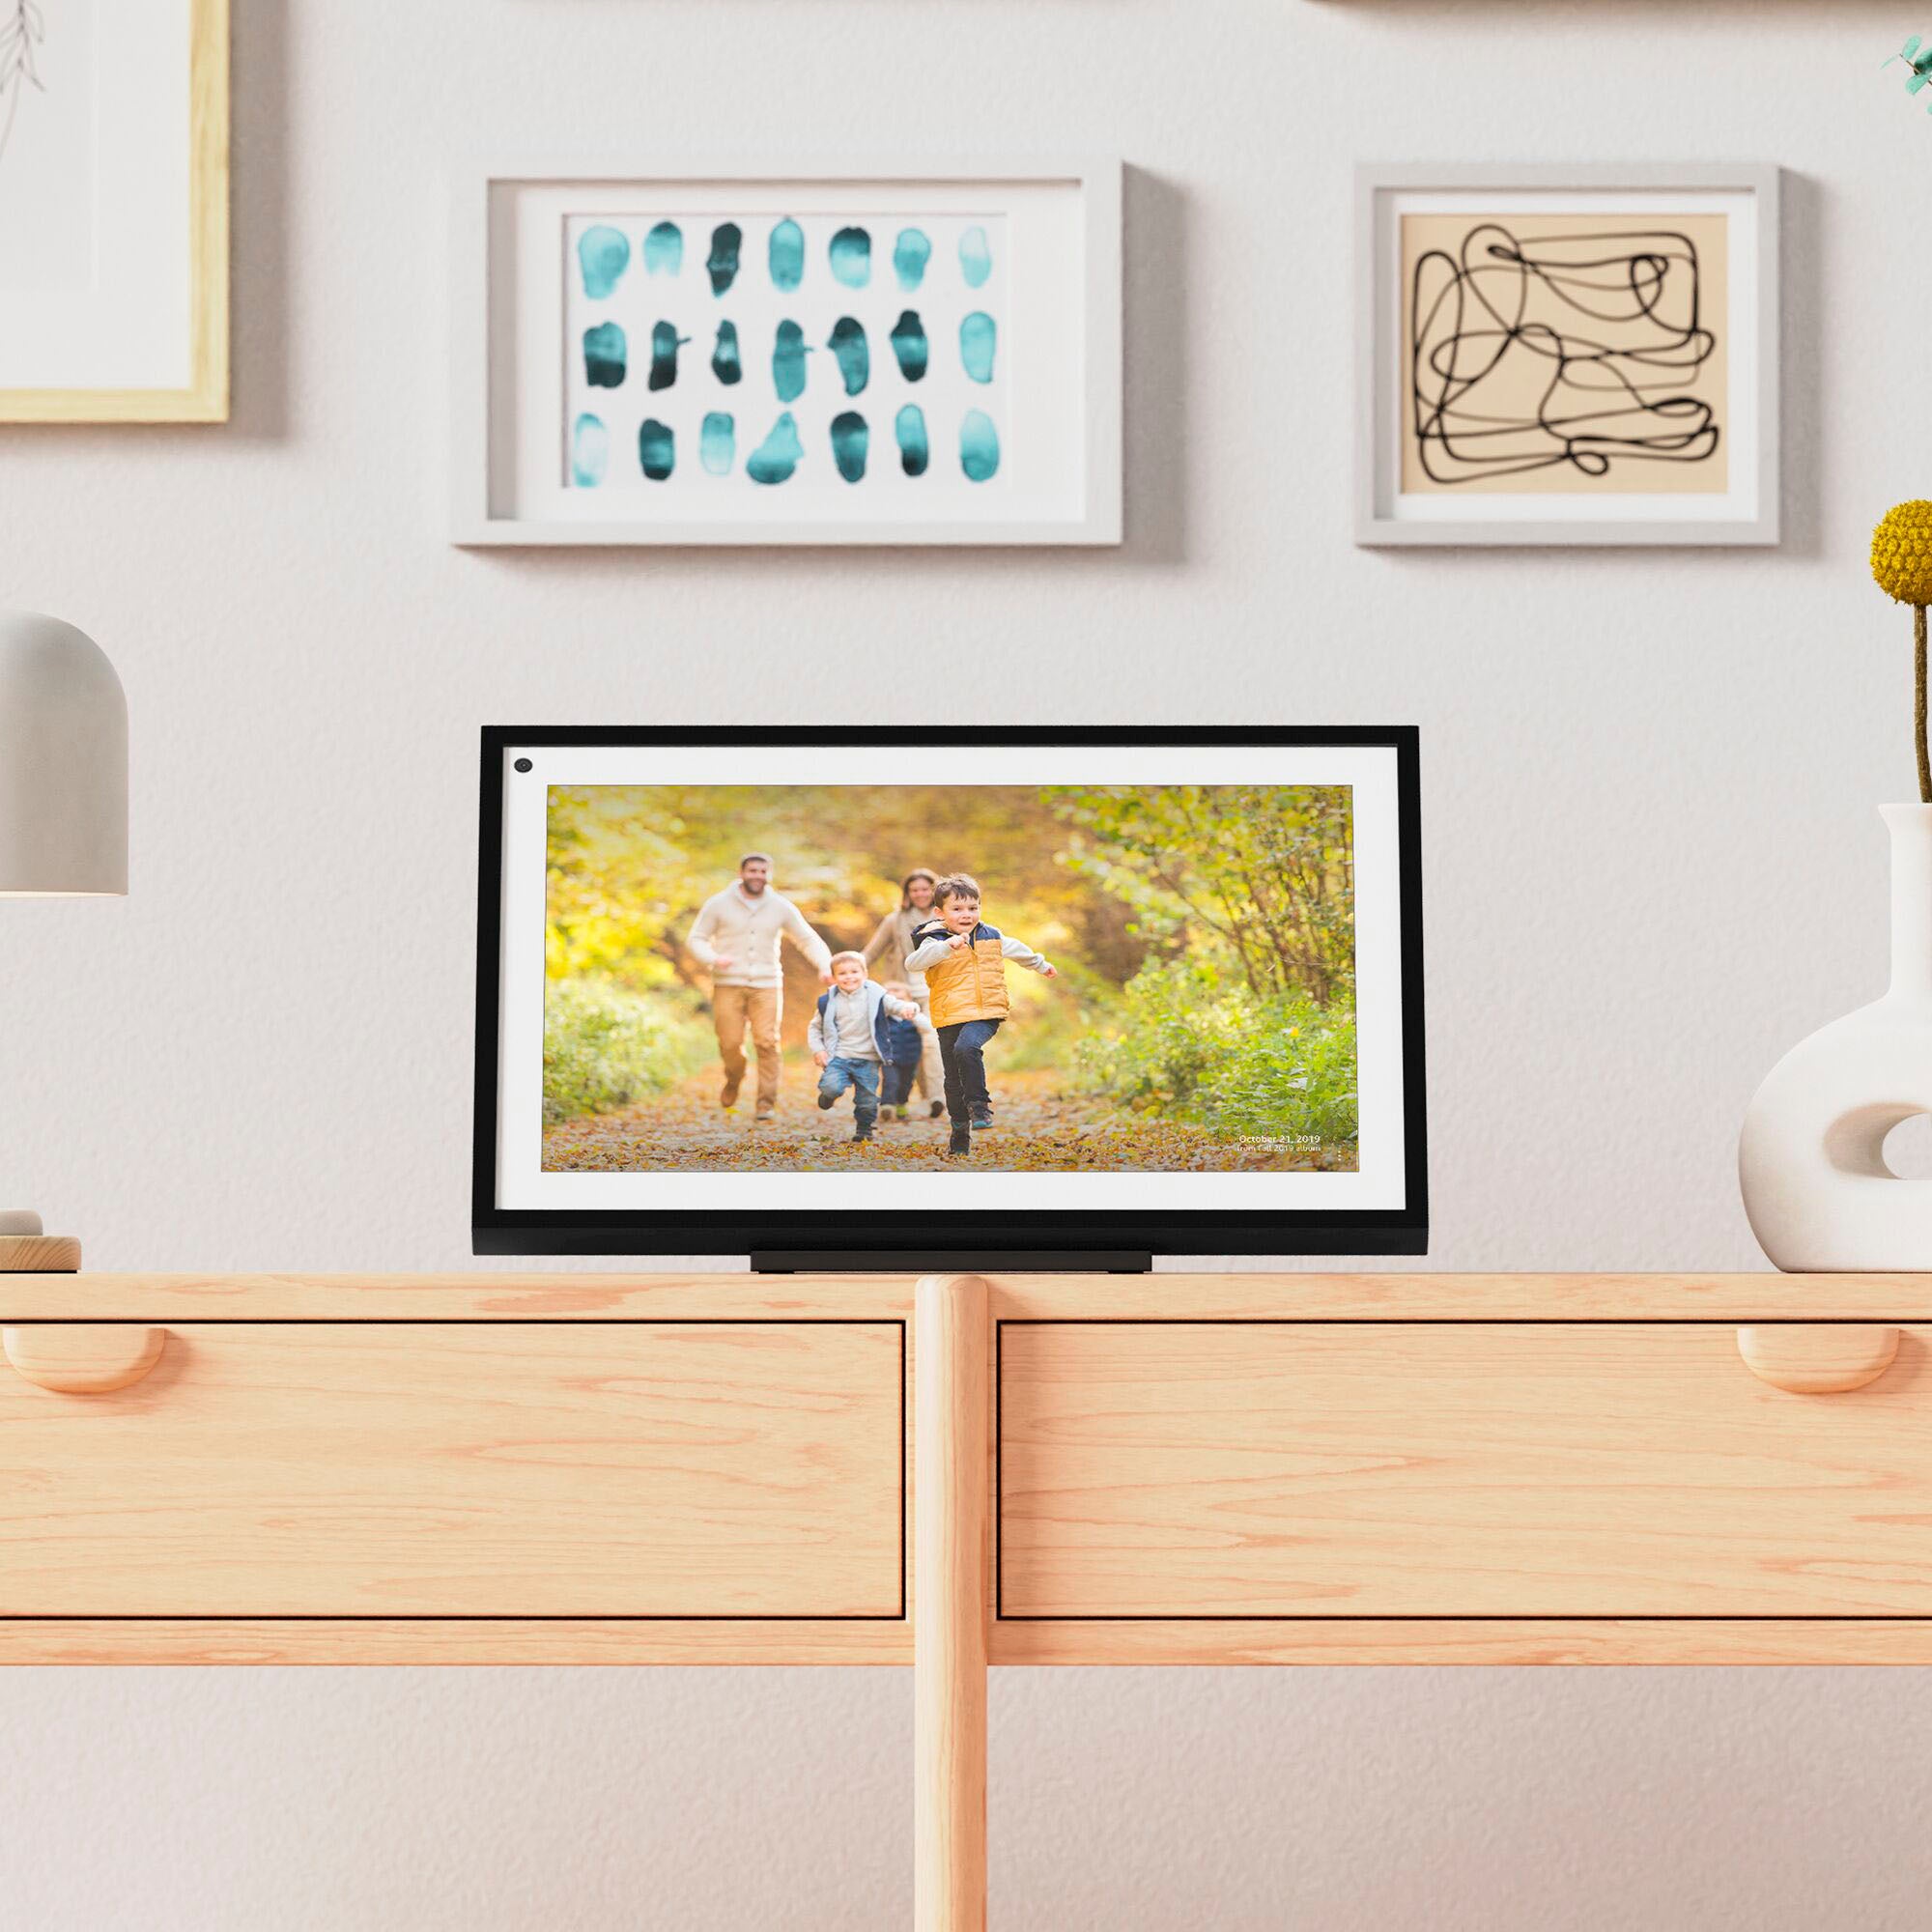 Amazon Echo Show 15 Full HD 15.6"" smart display & family organization with Alexa